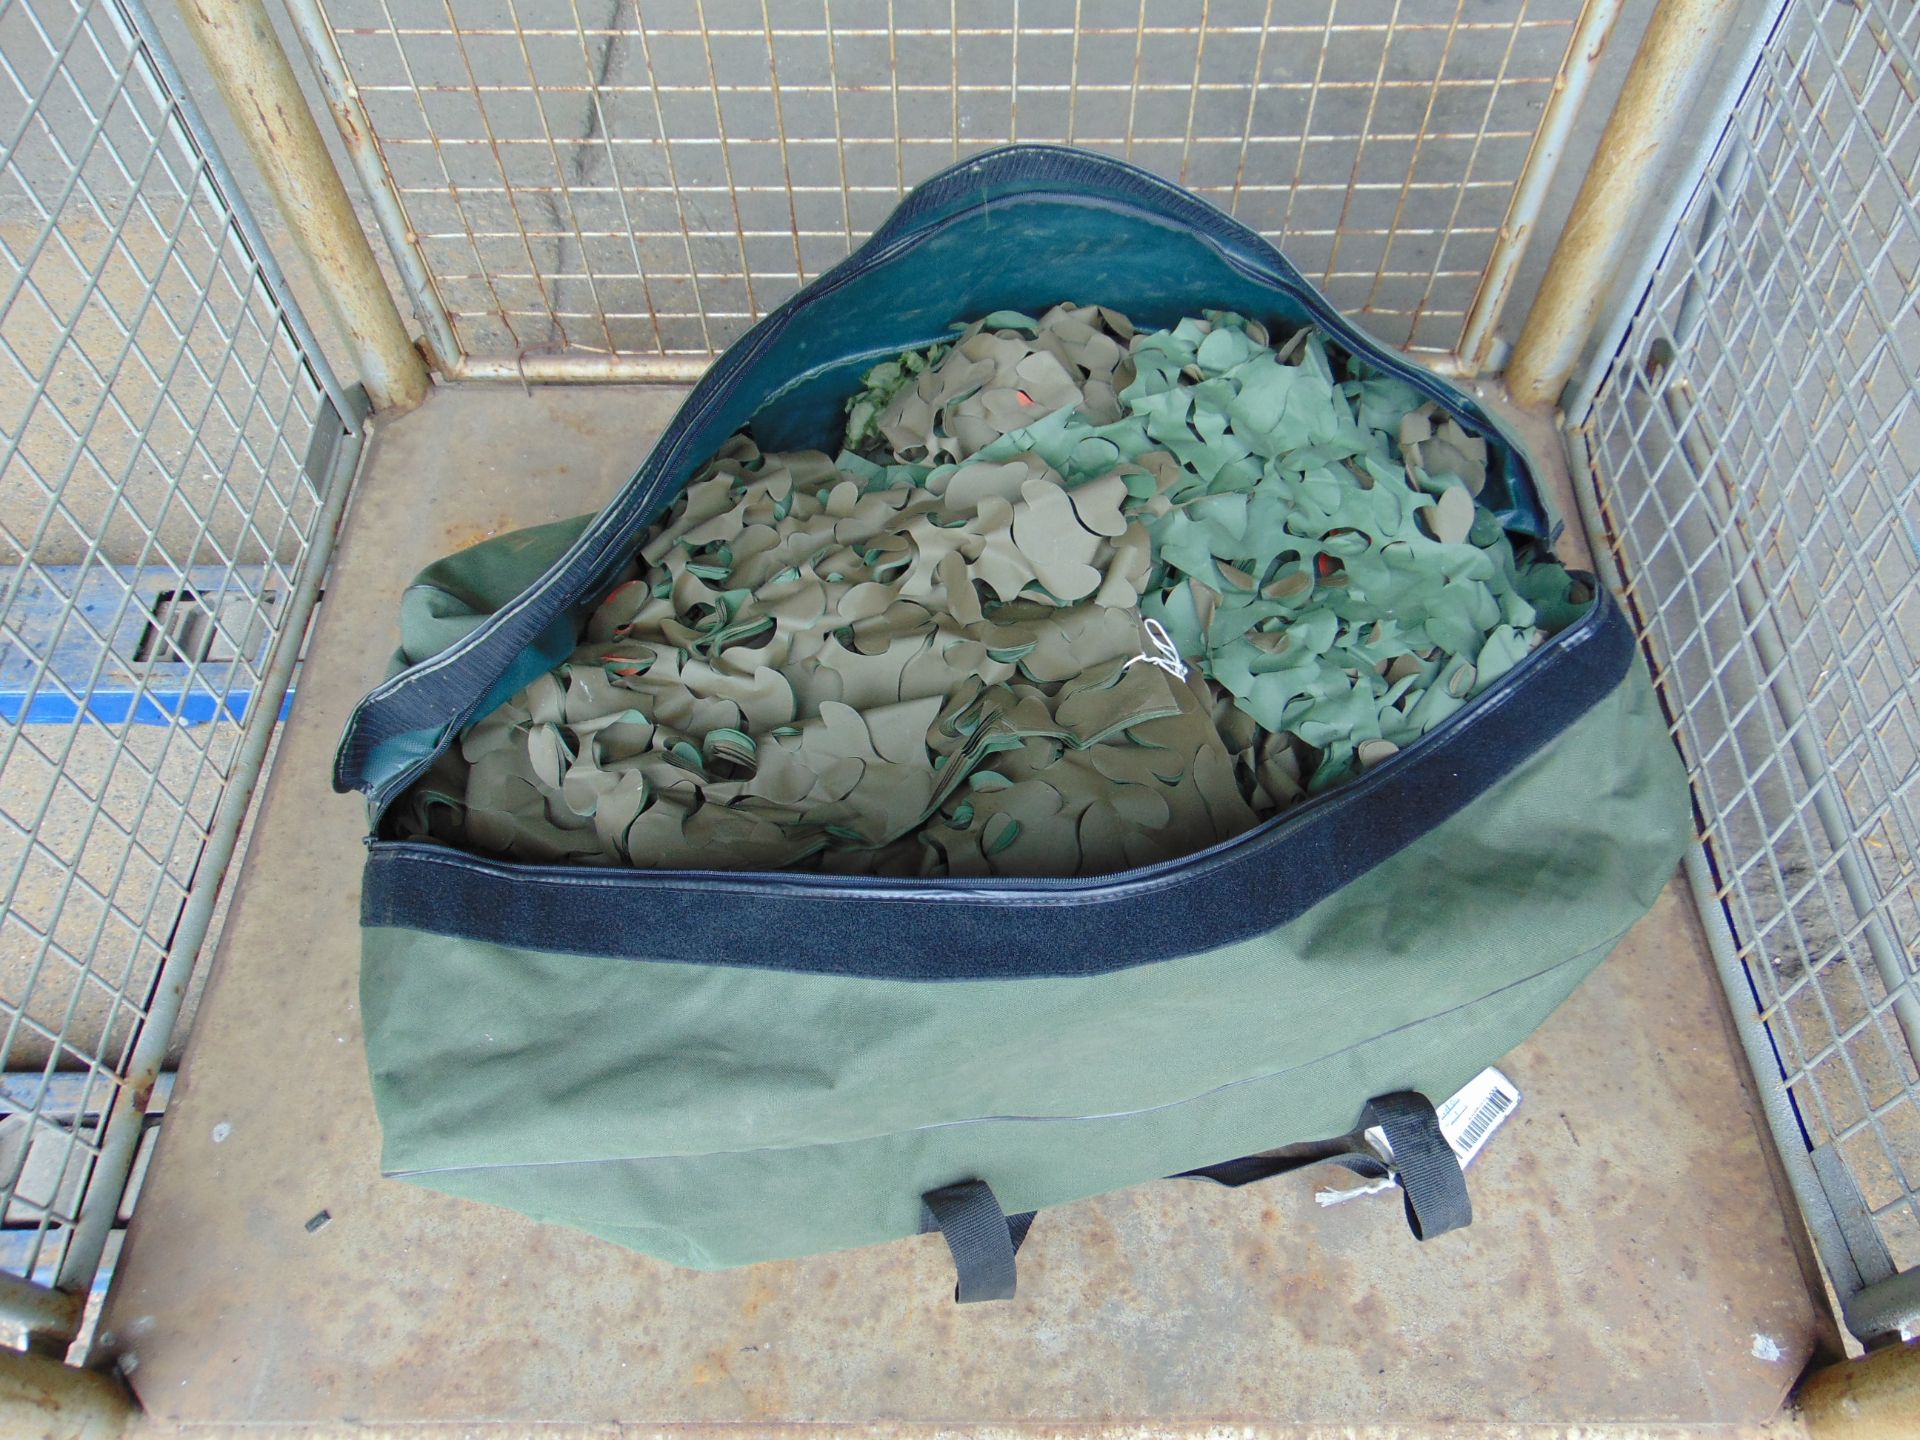 Camouflage Netting in Zipper Sack